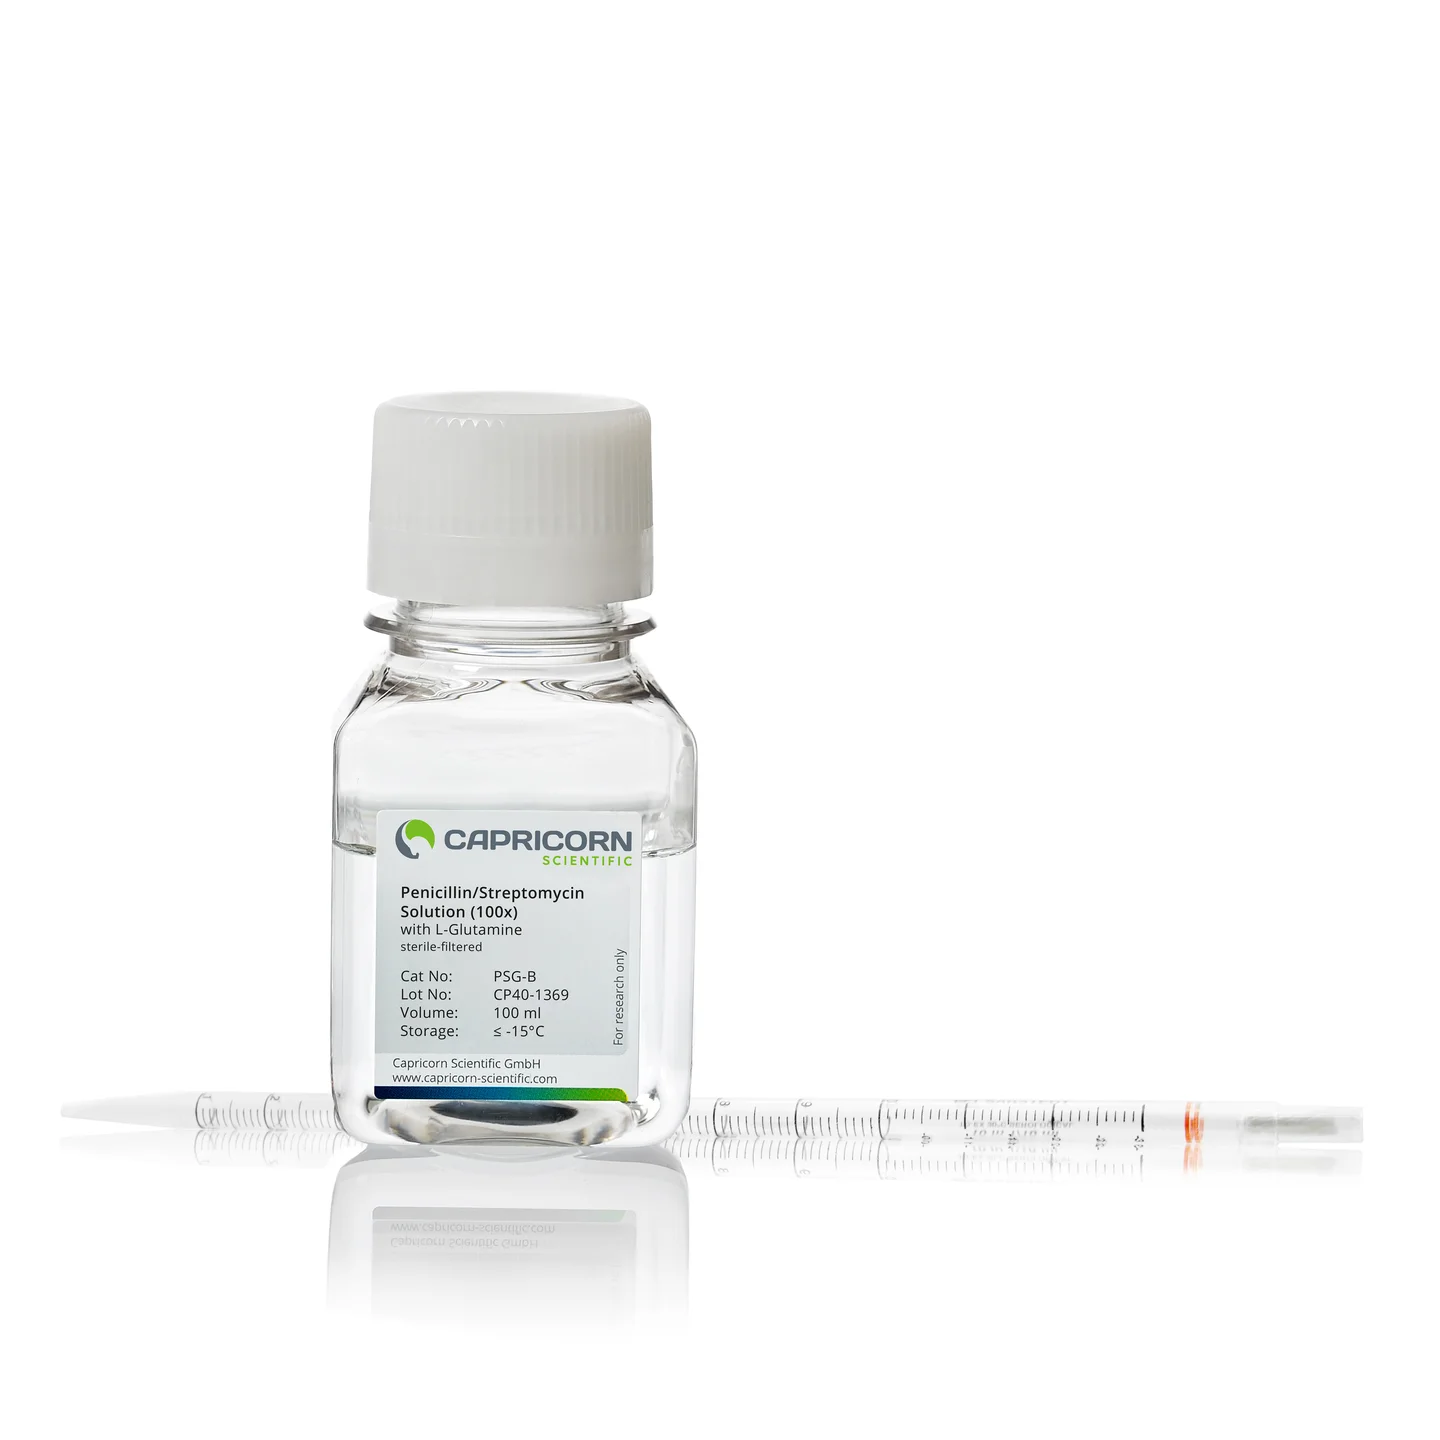 Penicillin/Streptomycin (Pen/Strep), 100x, with L-Glutamine